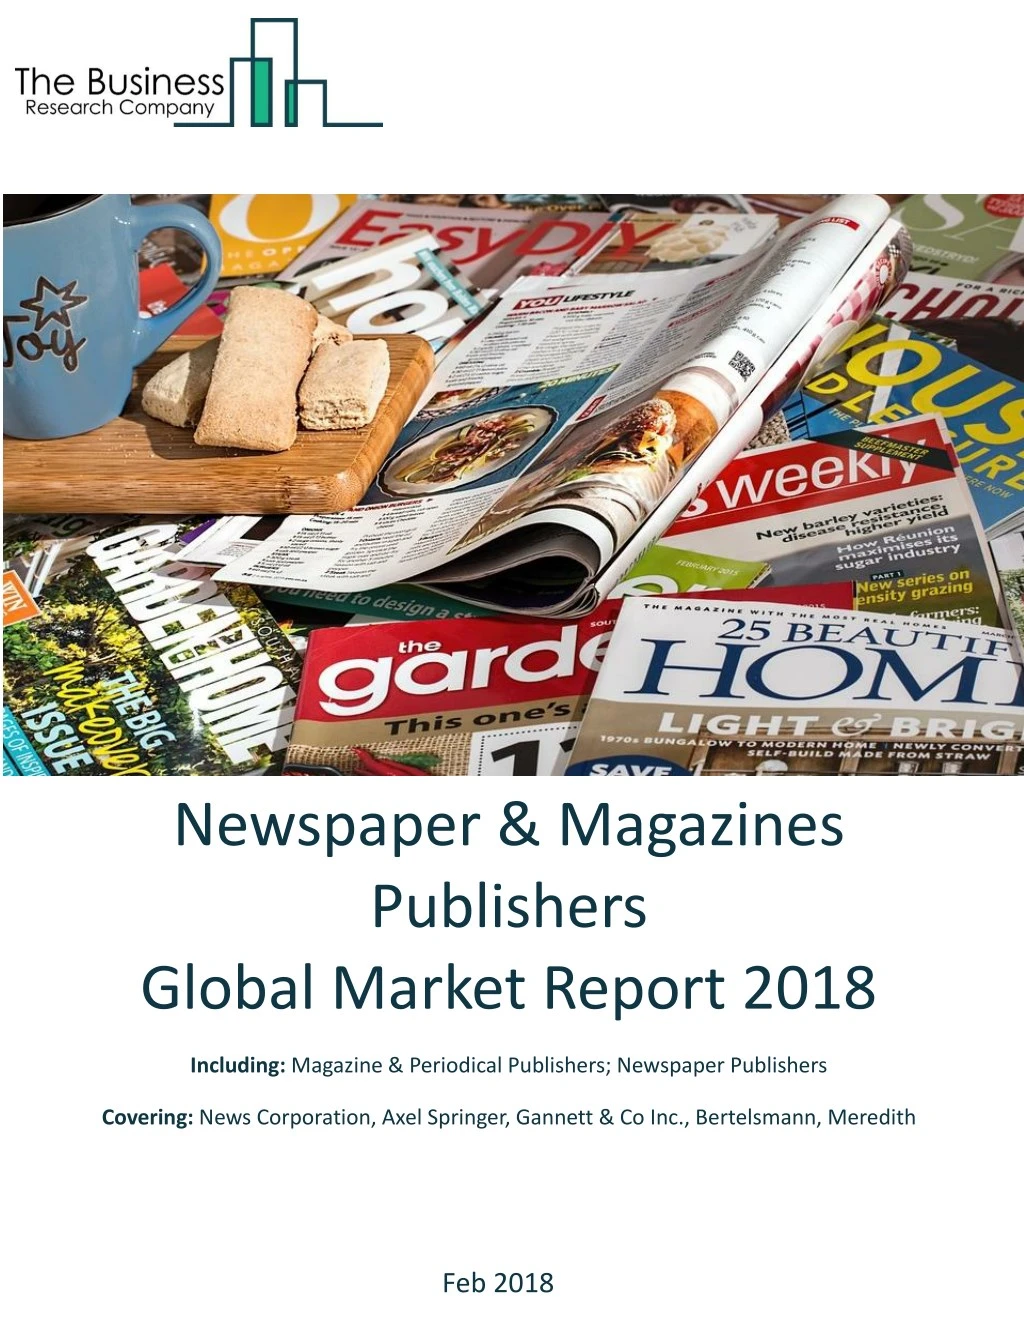 newspaper magazines publishers global market